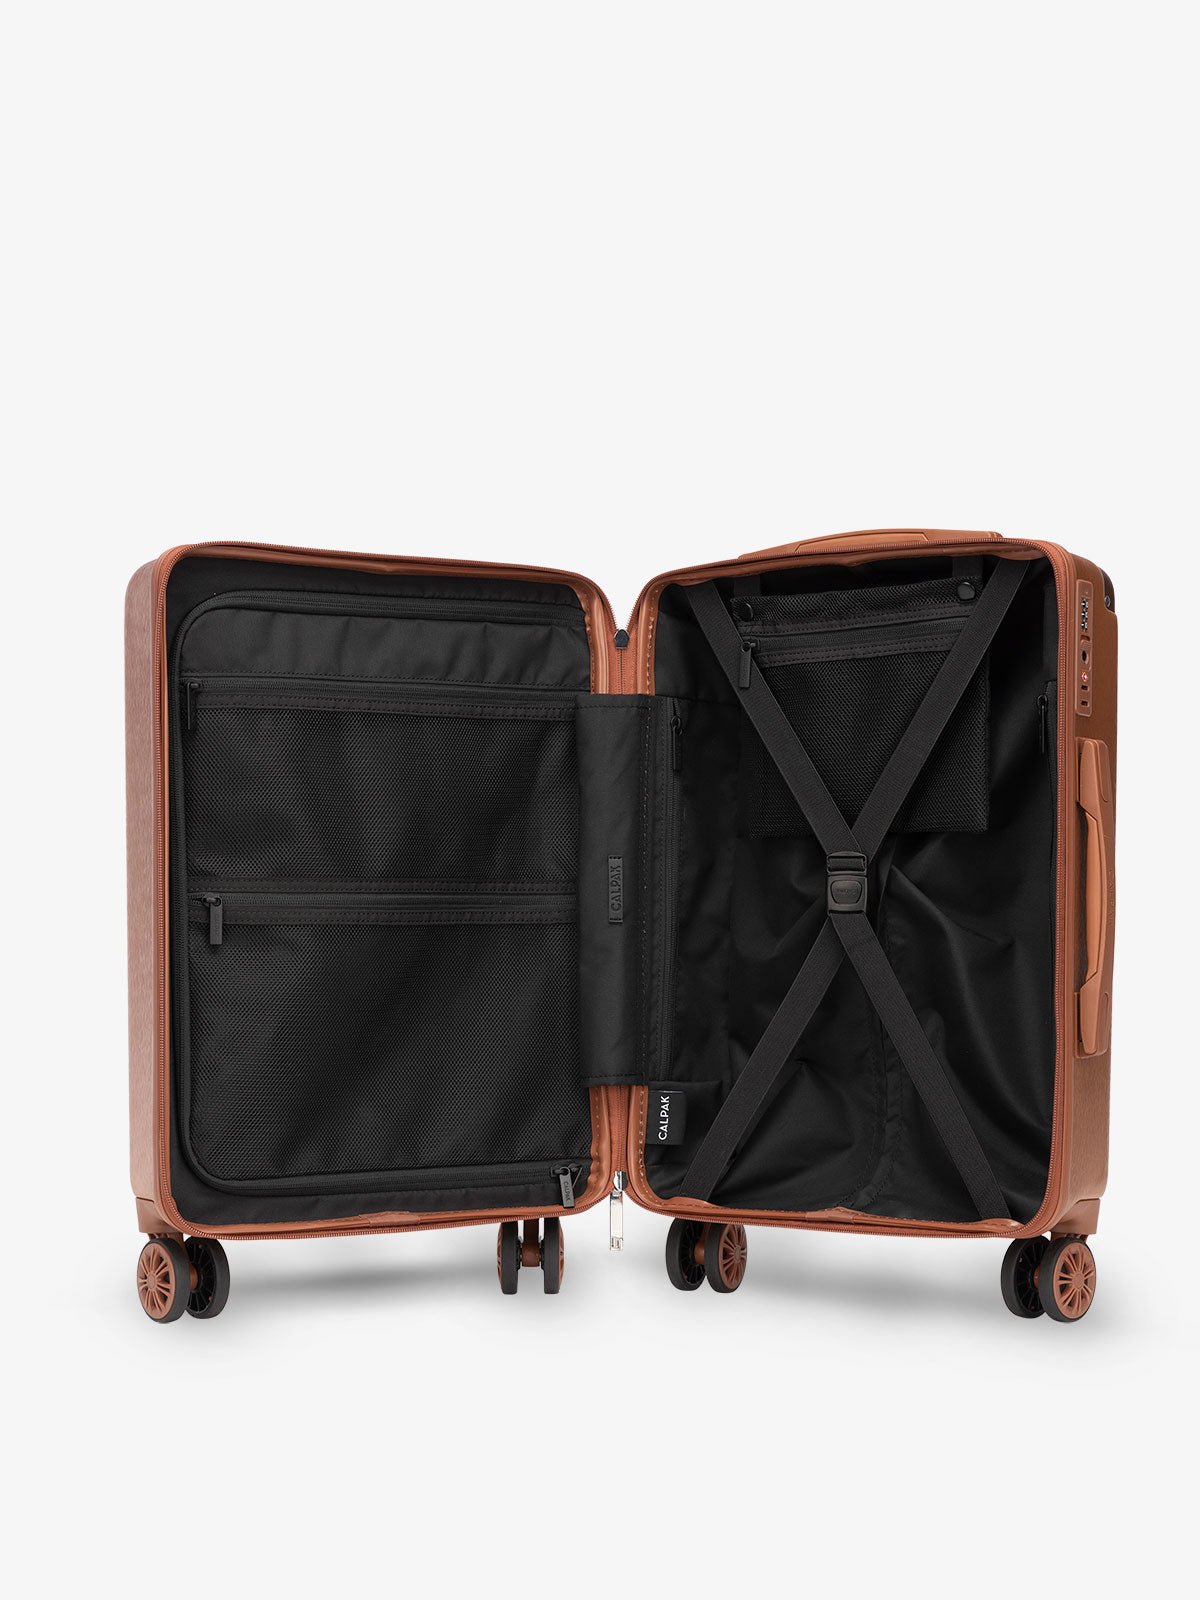 CALPAK Ambeur gold medium sized expandable suitcase with compression straps